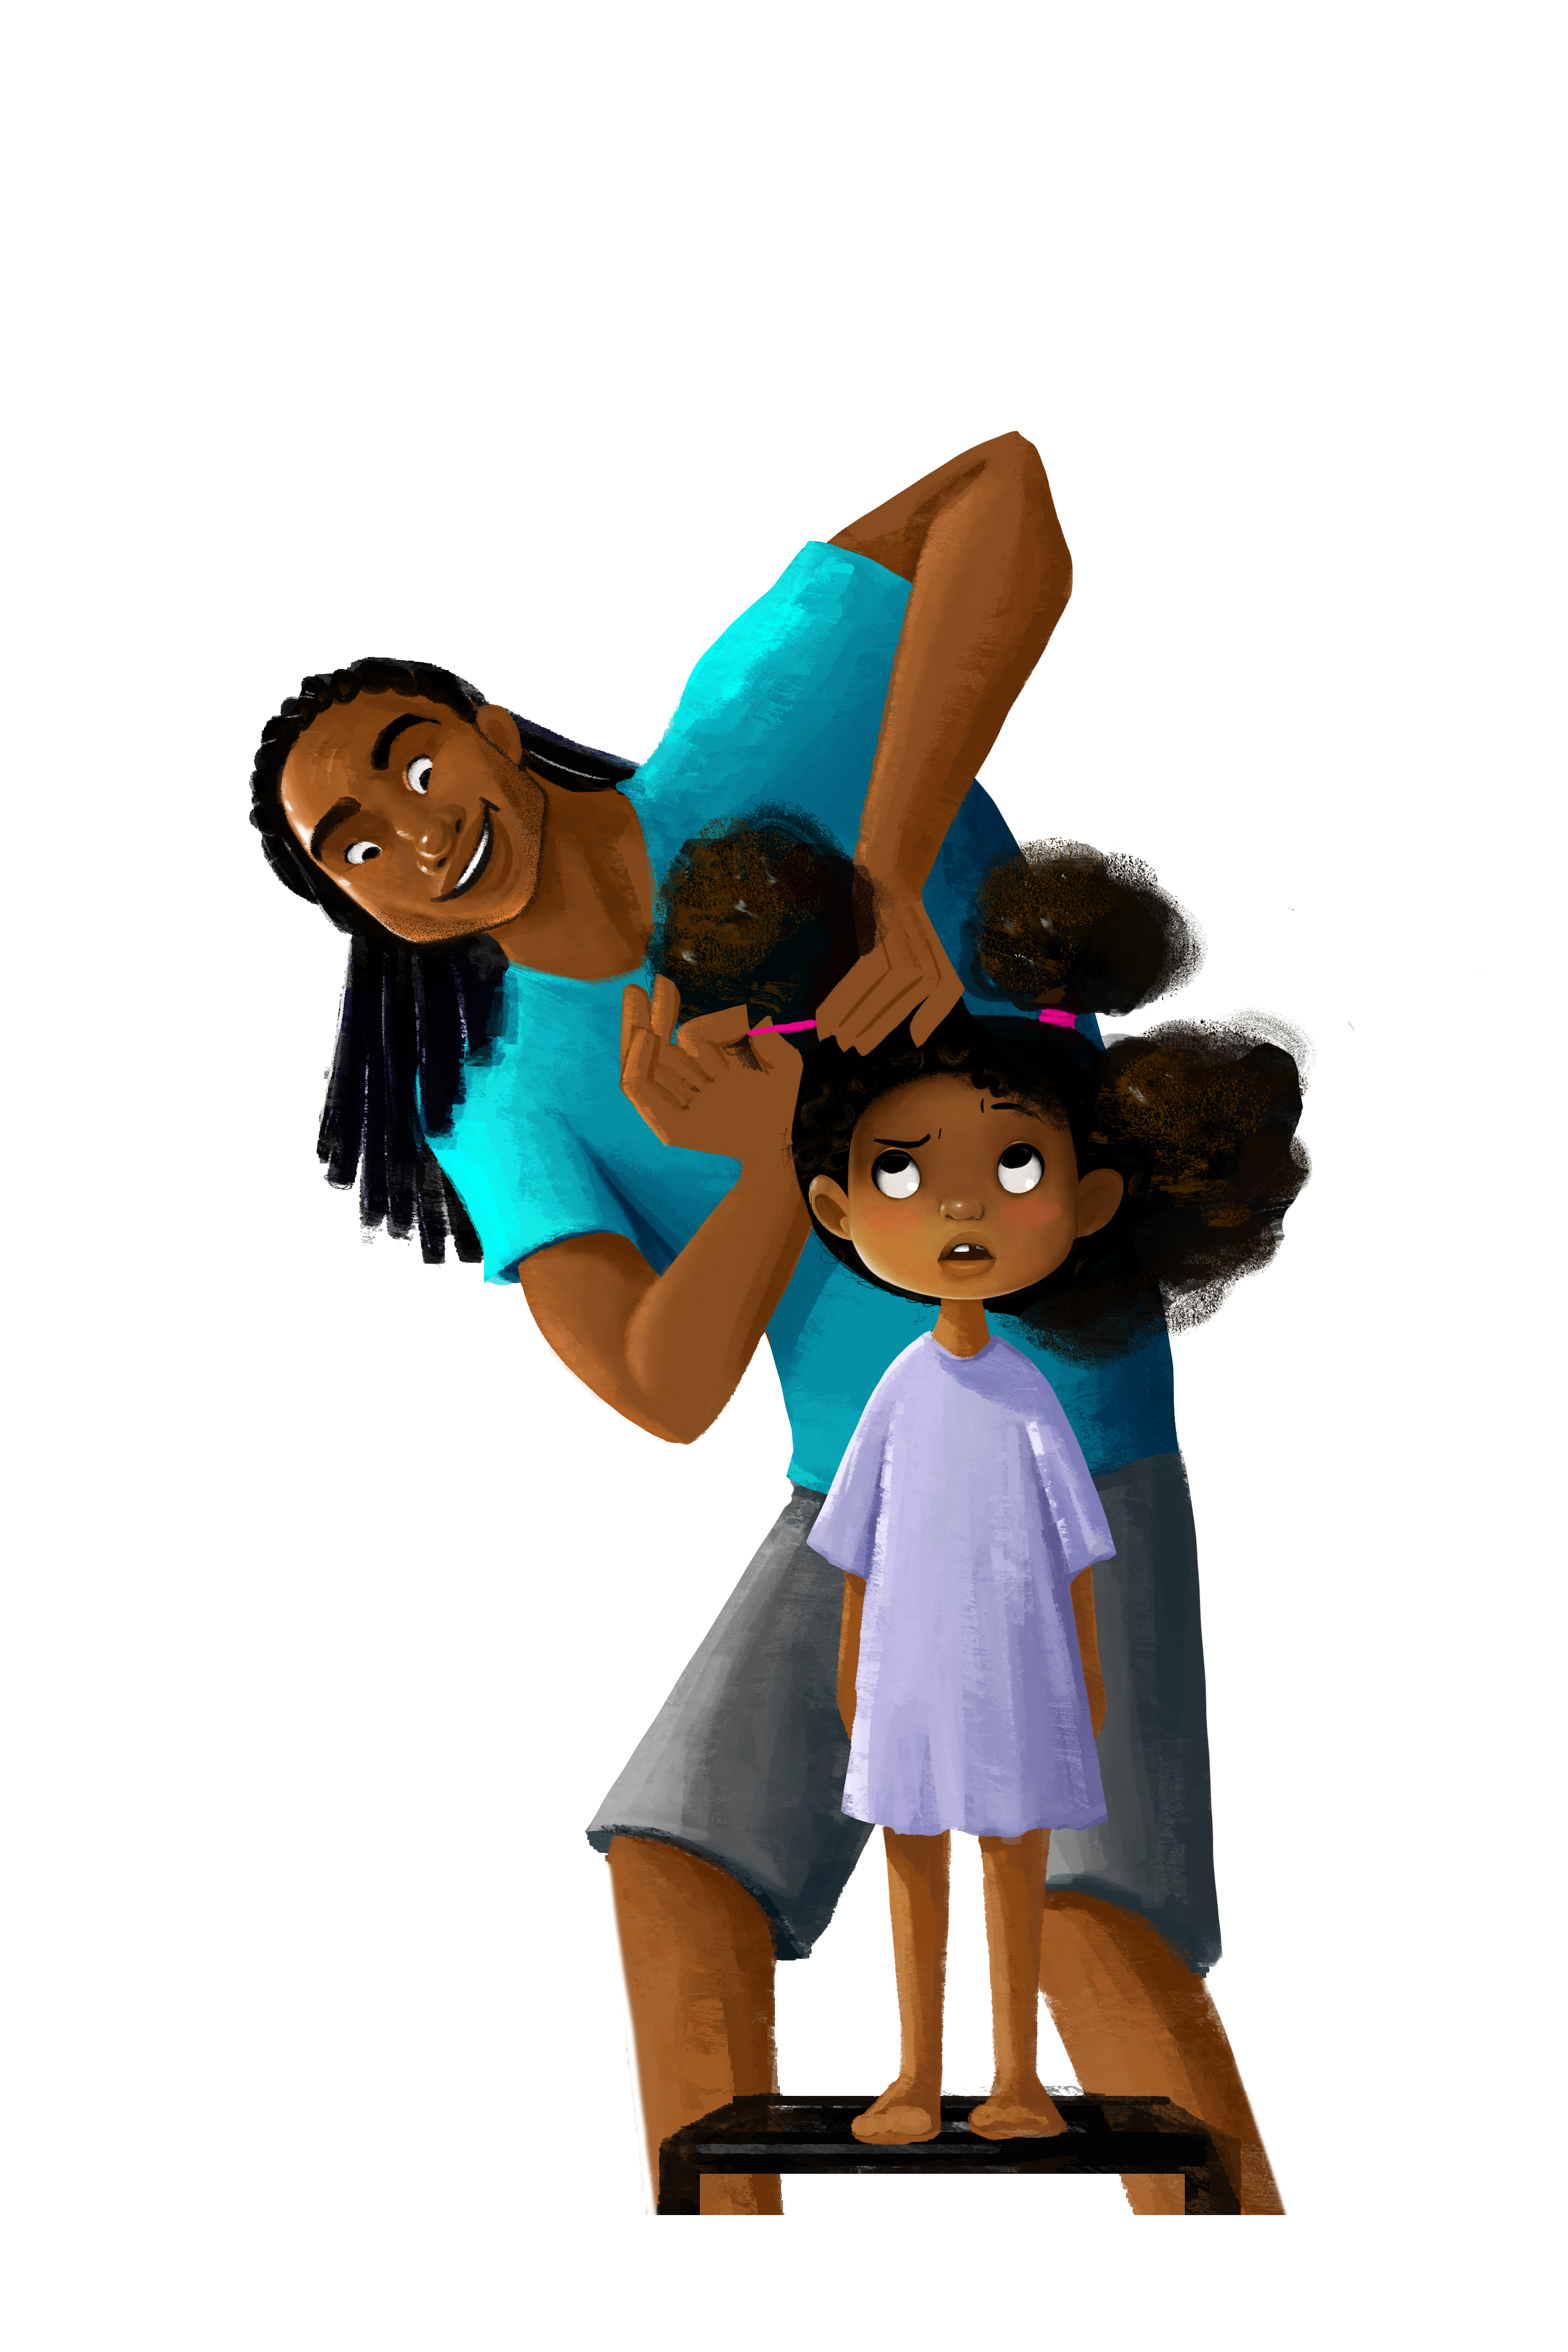 Swoon Alert: New Cartoon Focuses On Black Dad Doing His Baby Girl's